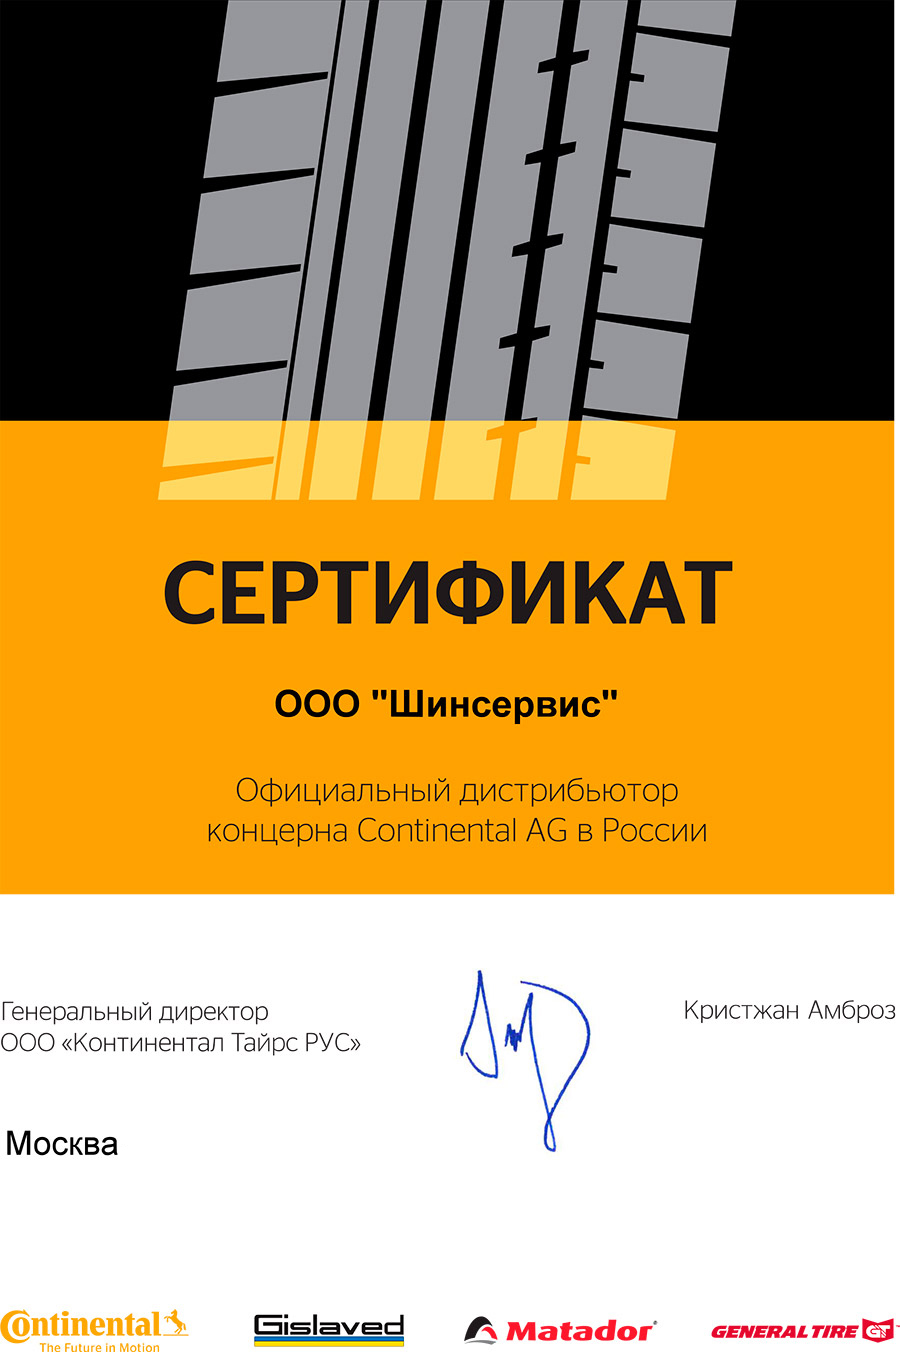 Сертификат дистрибьютора Continental